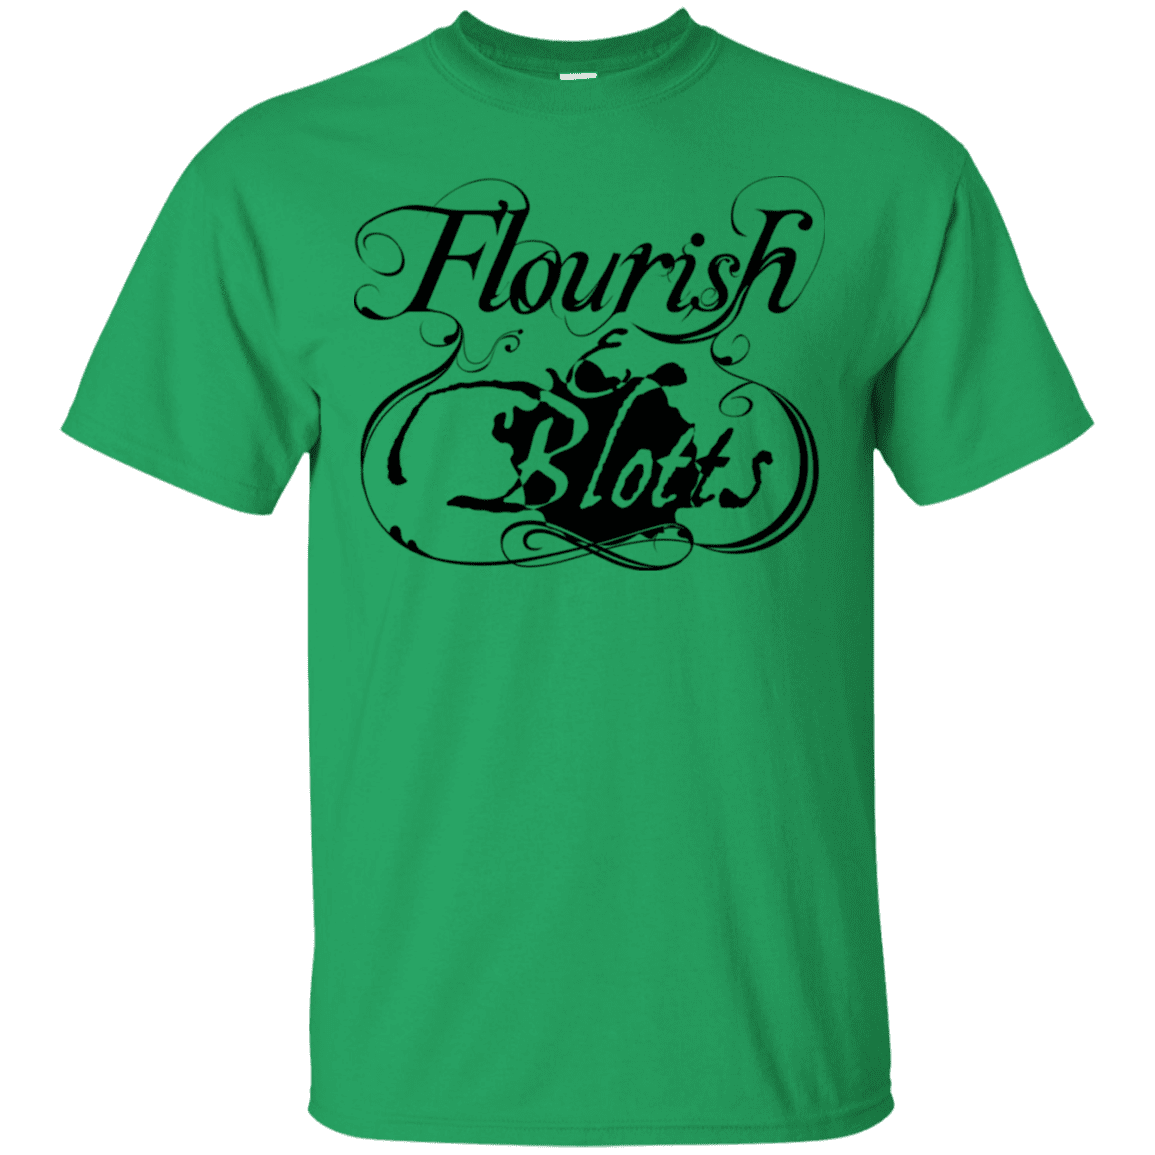 T-Shirts Irish Green / S Flourish and Blotts of Diagon Alley T-Shirt